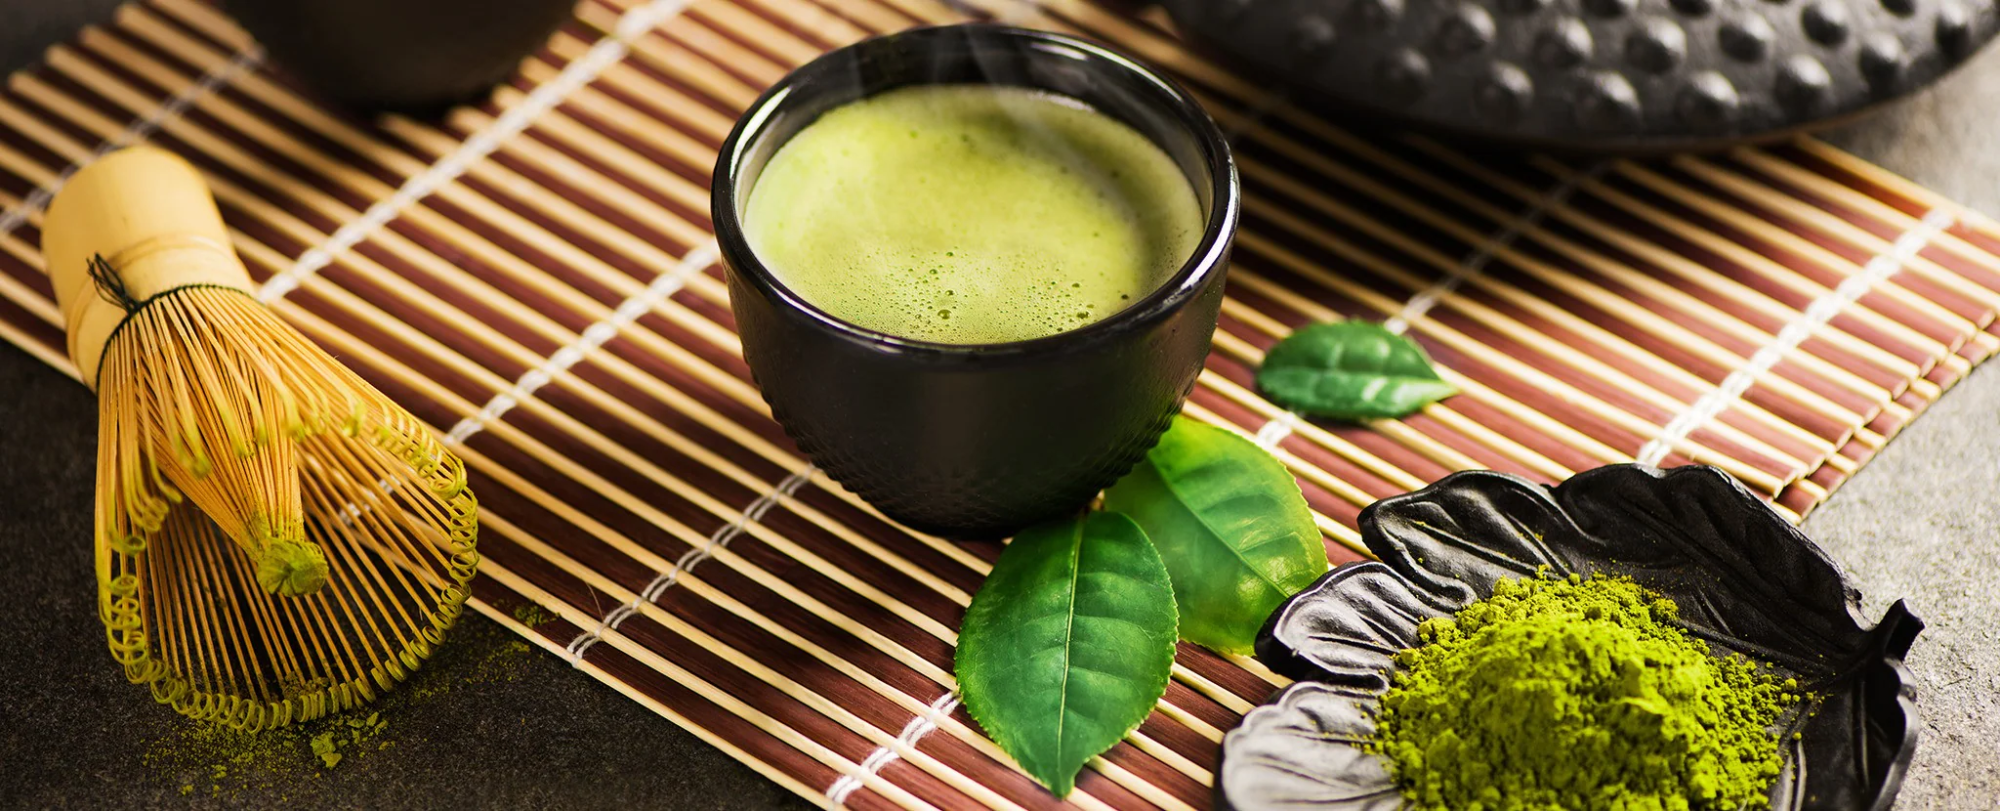 Japanese Matcha Tea and its benefits